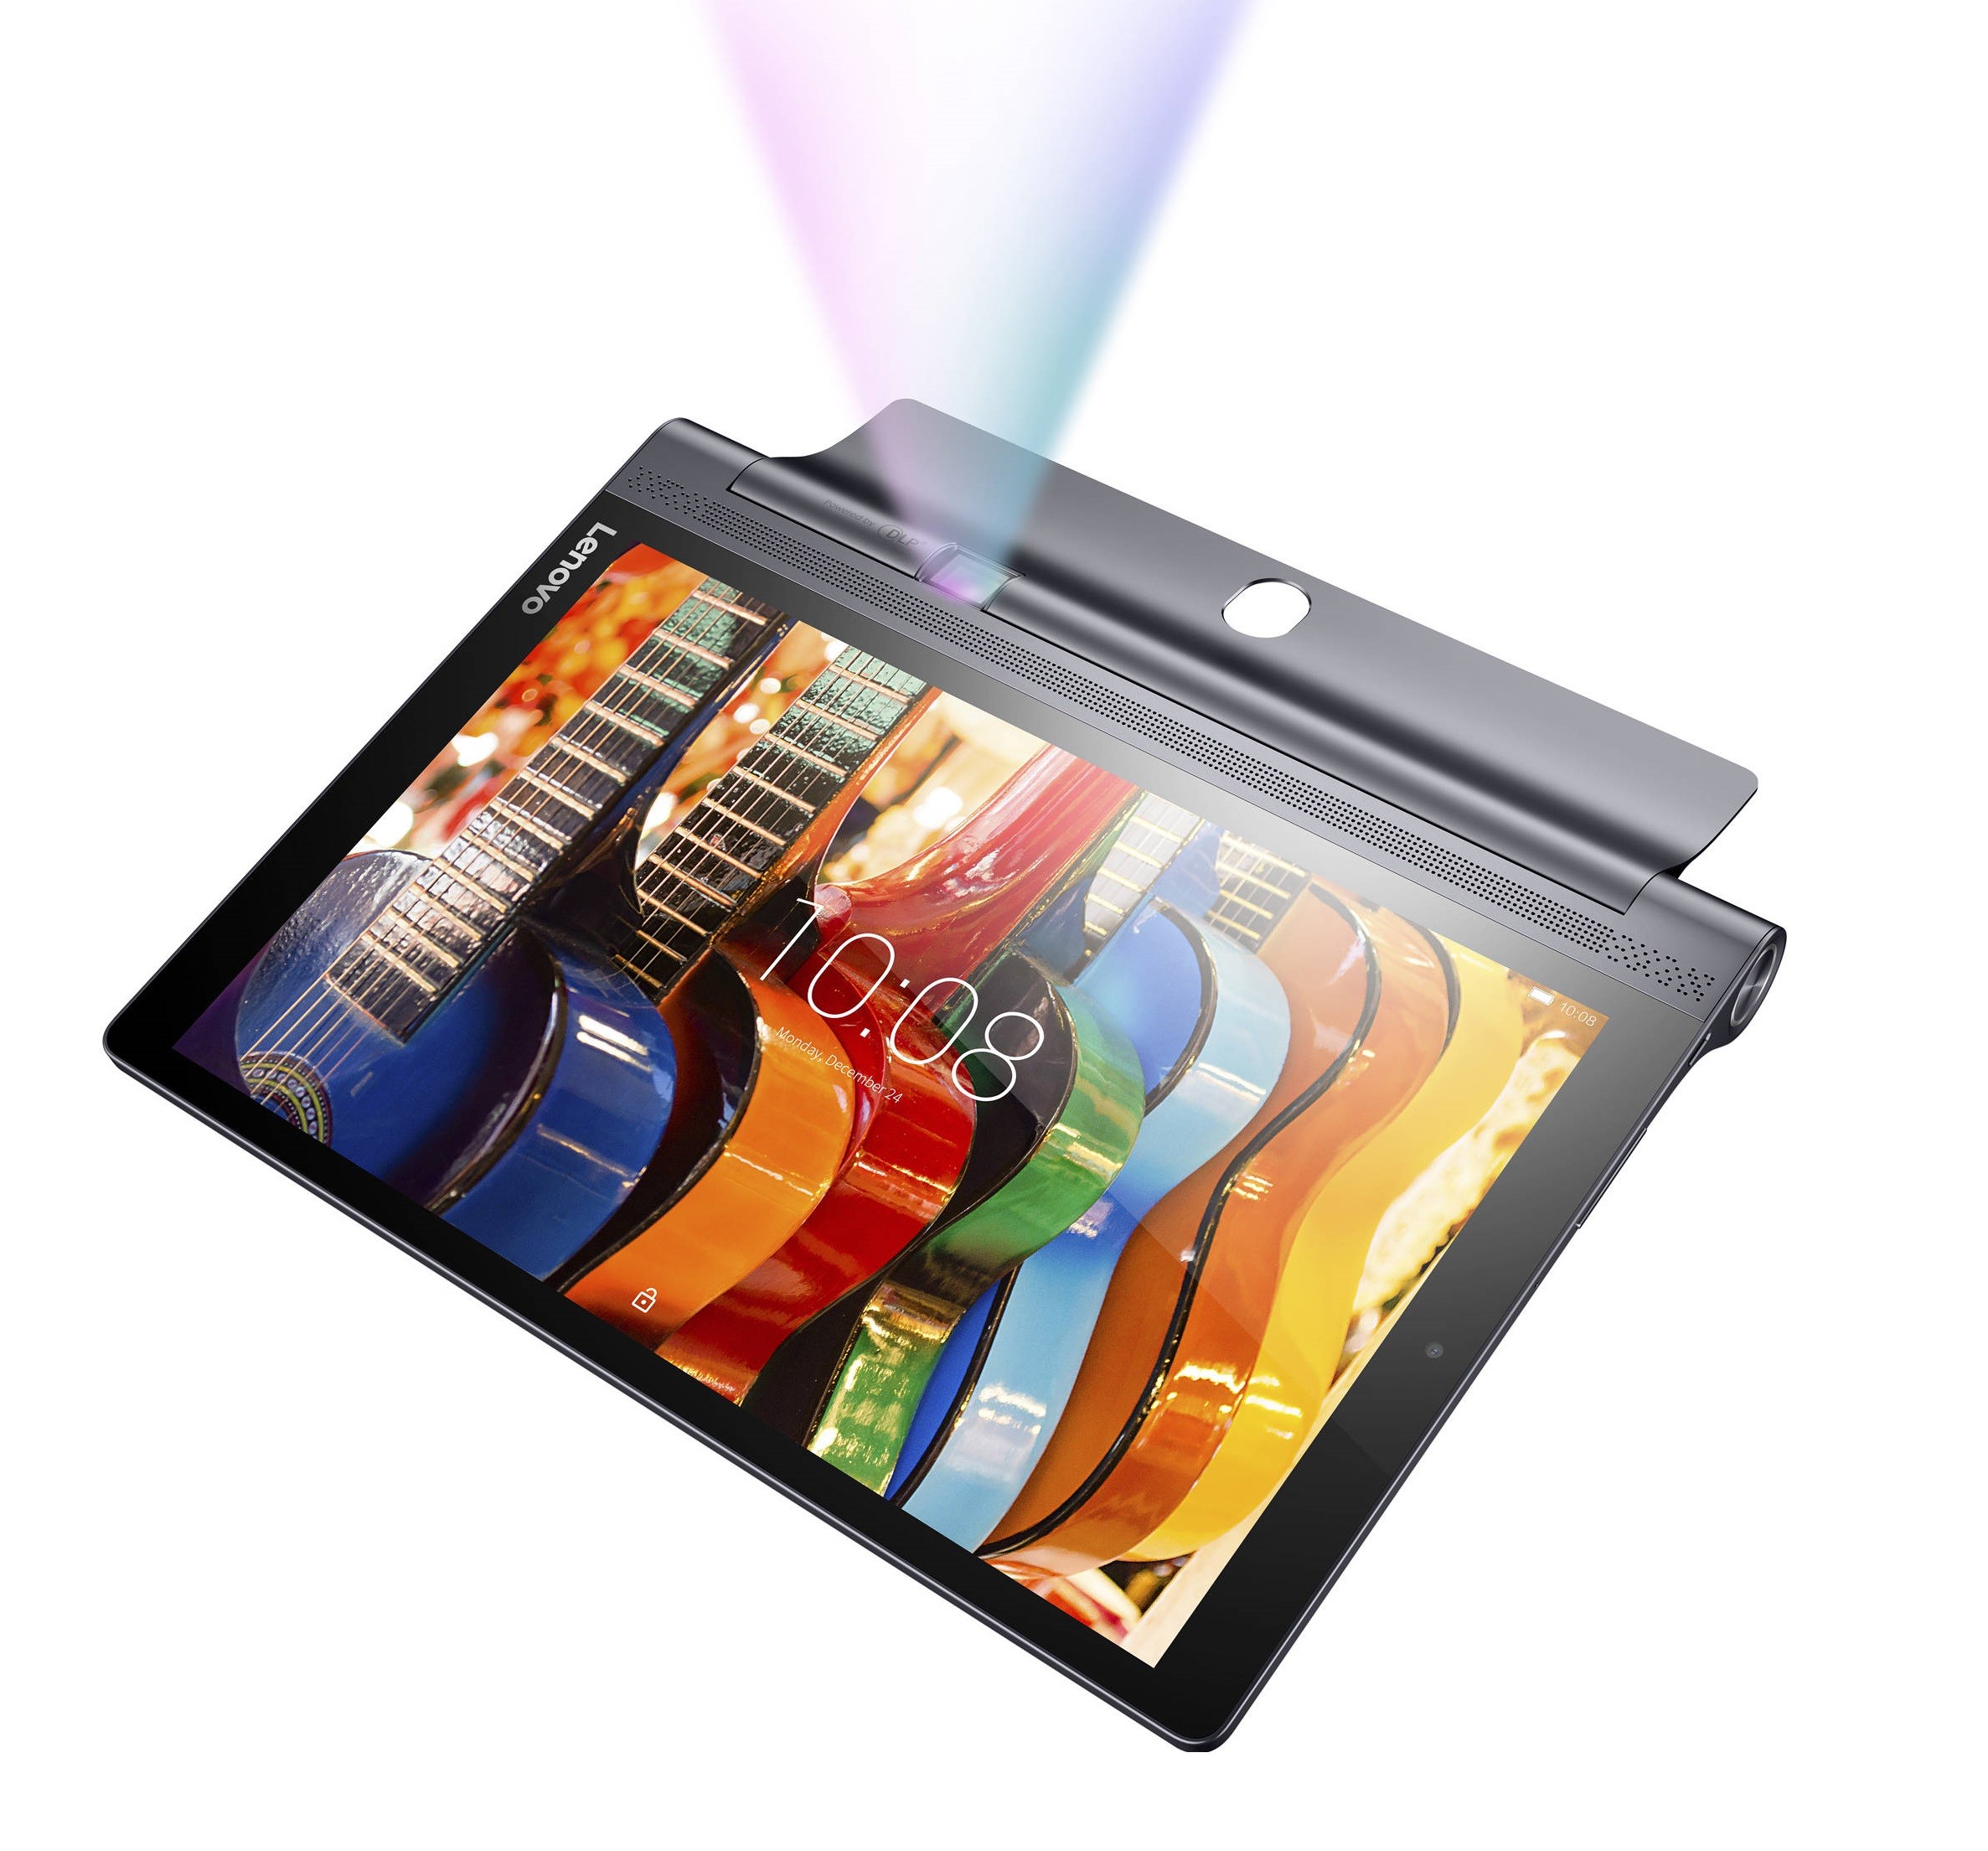 Lenovo Yoga Tab 3 Pro 10.1" Atom x5-Z8550 4GB 64GB Android Tablet w/ Projector U